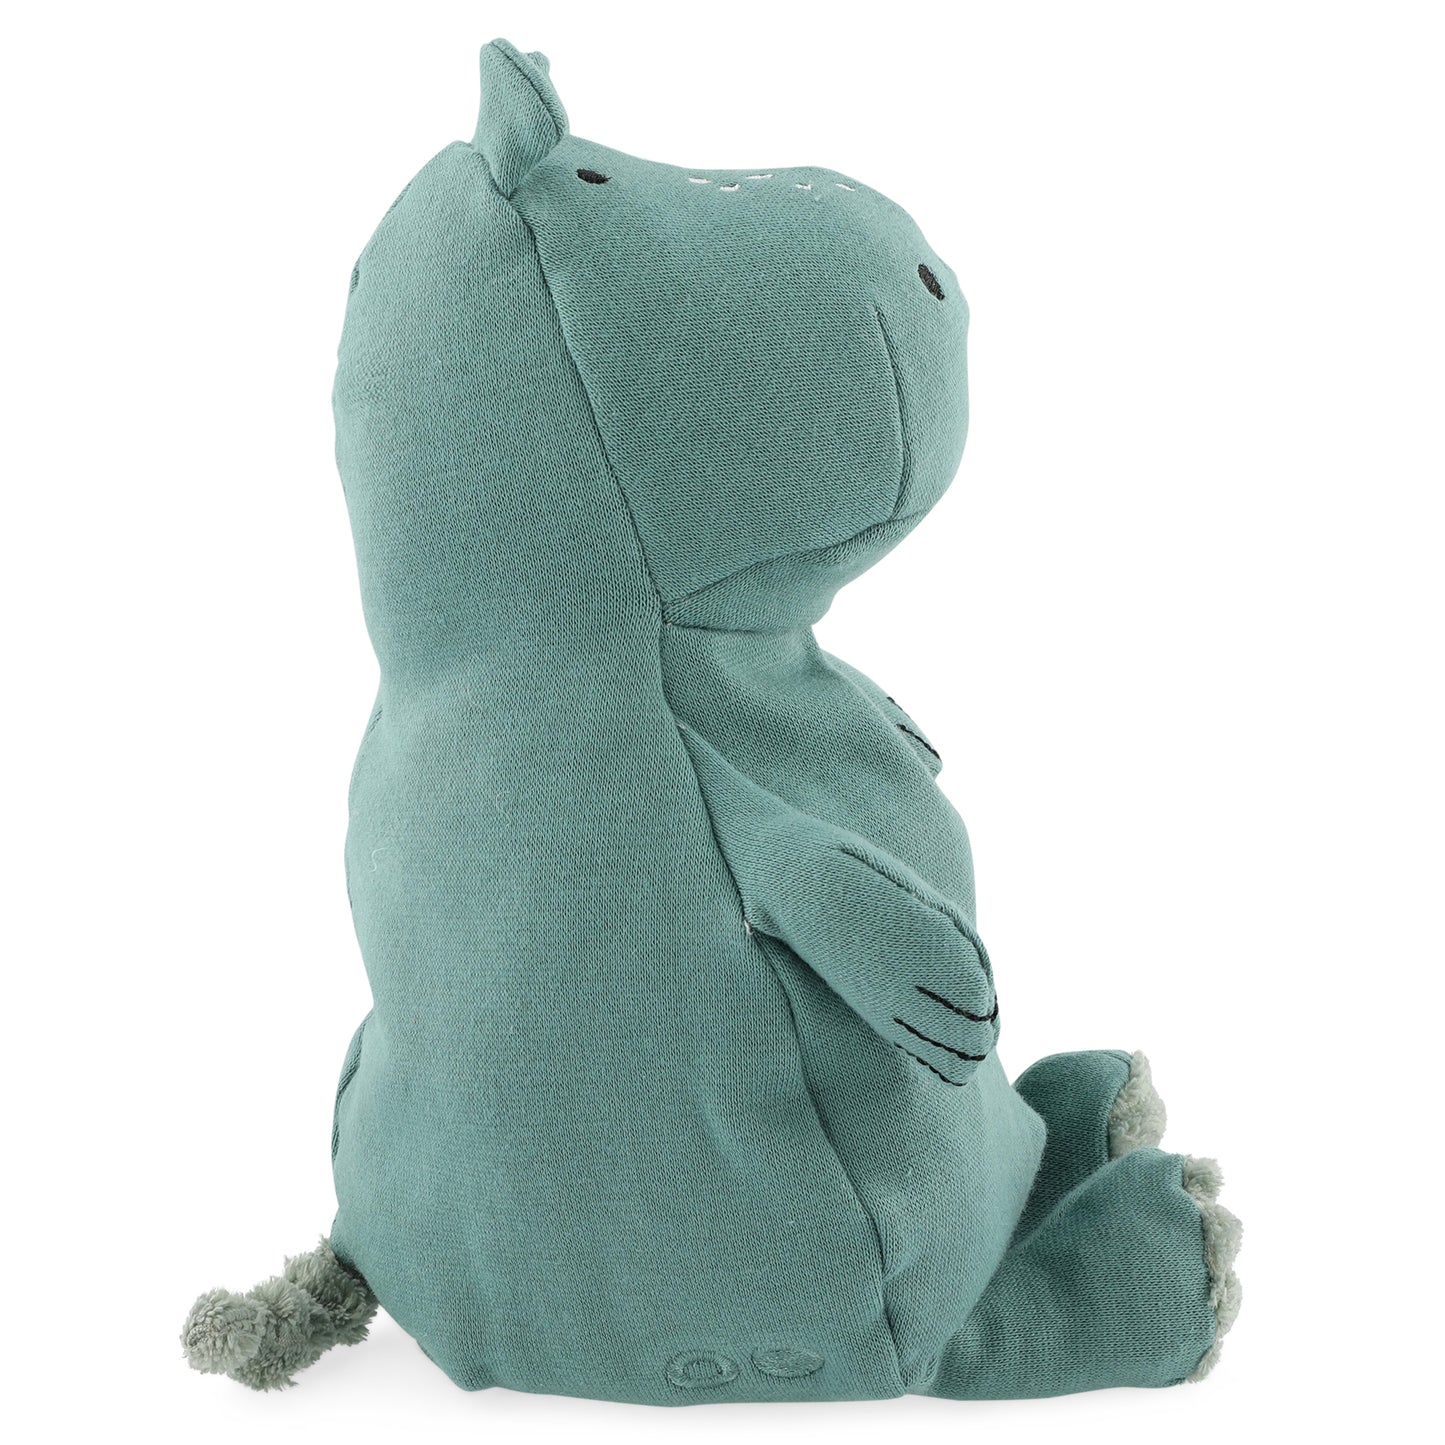 Plush Toy Small - Mr. Hippo